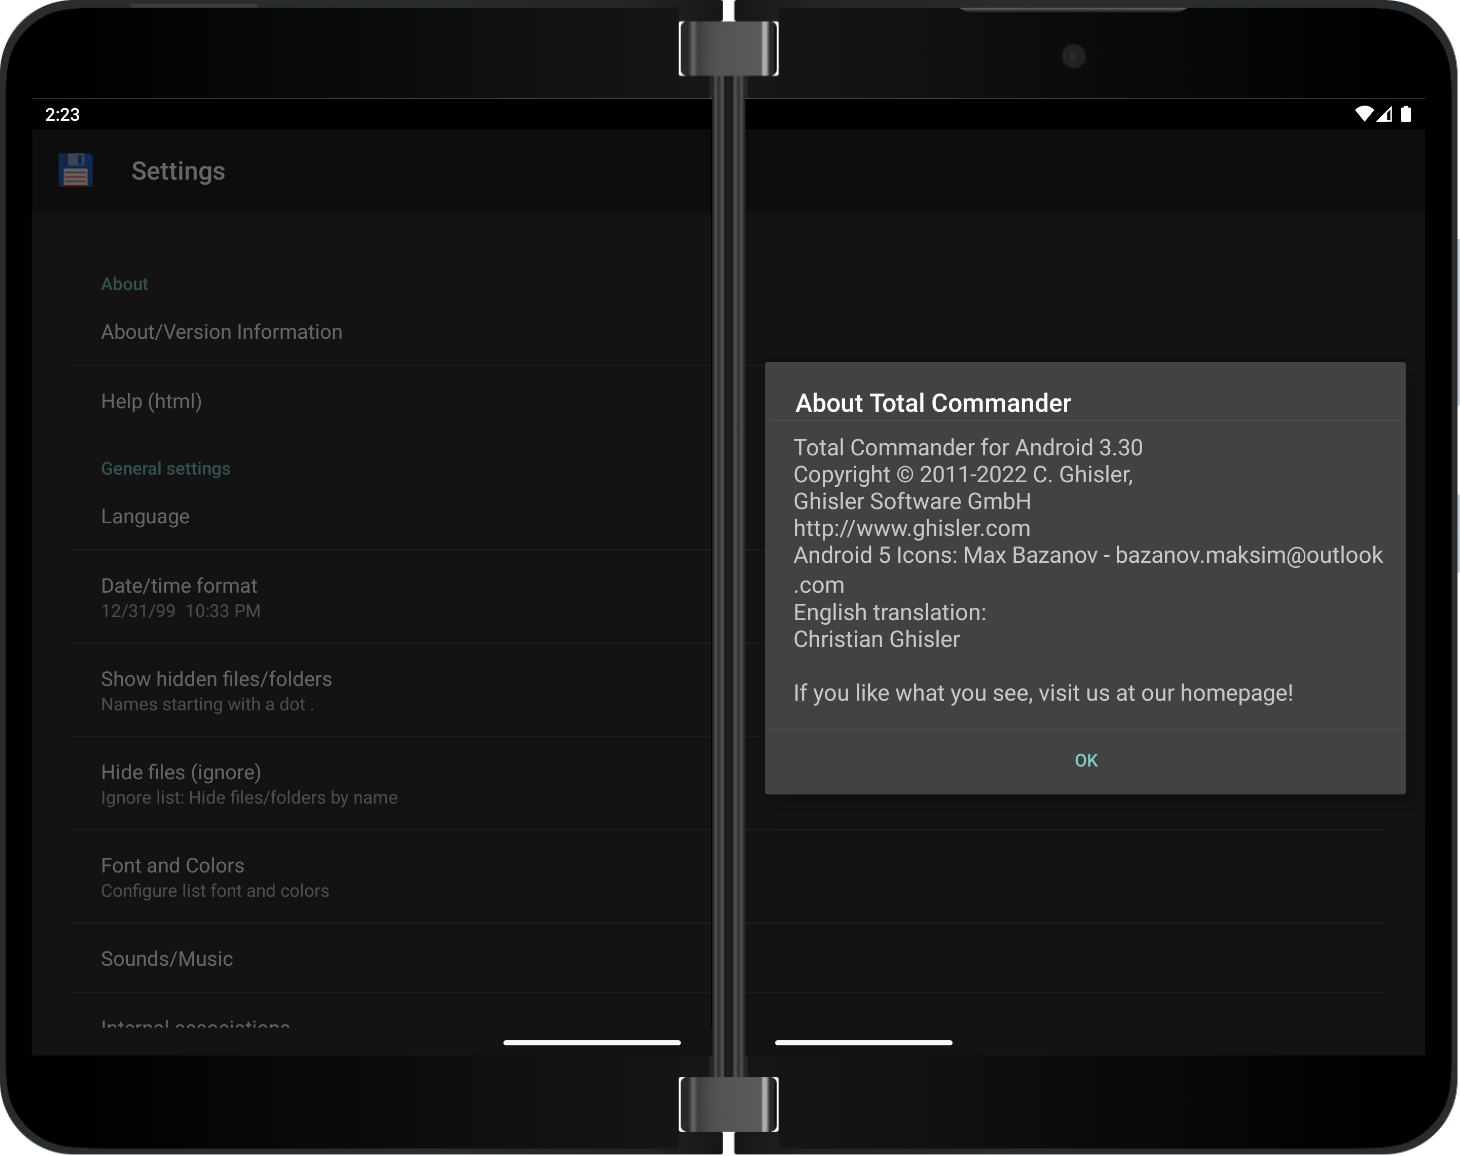 Surface Duo showing Total Commander app details